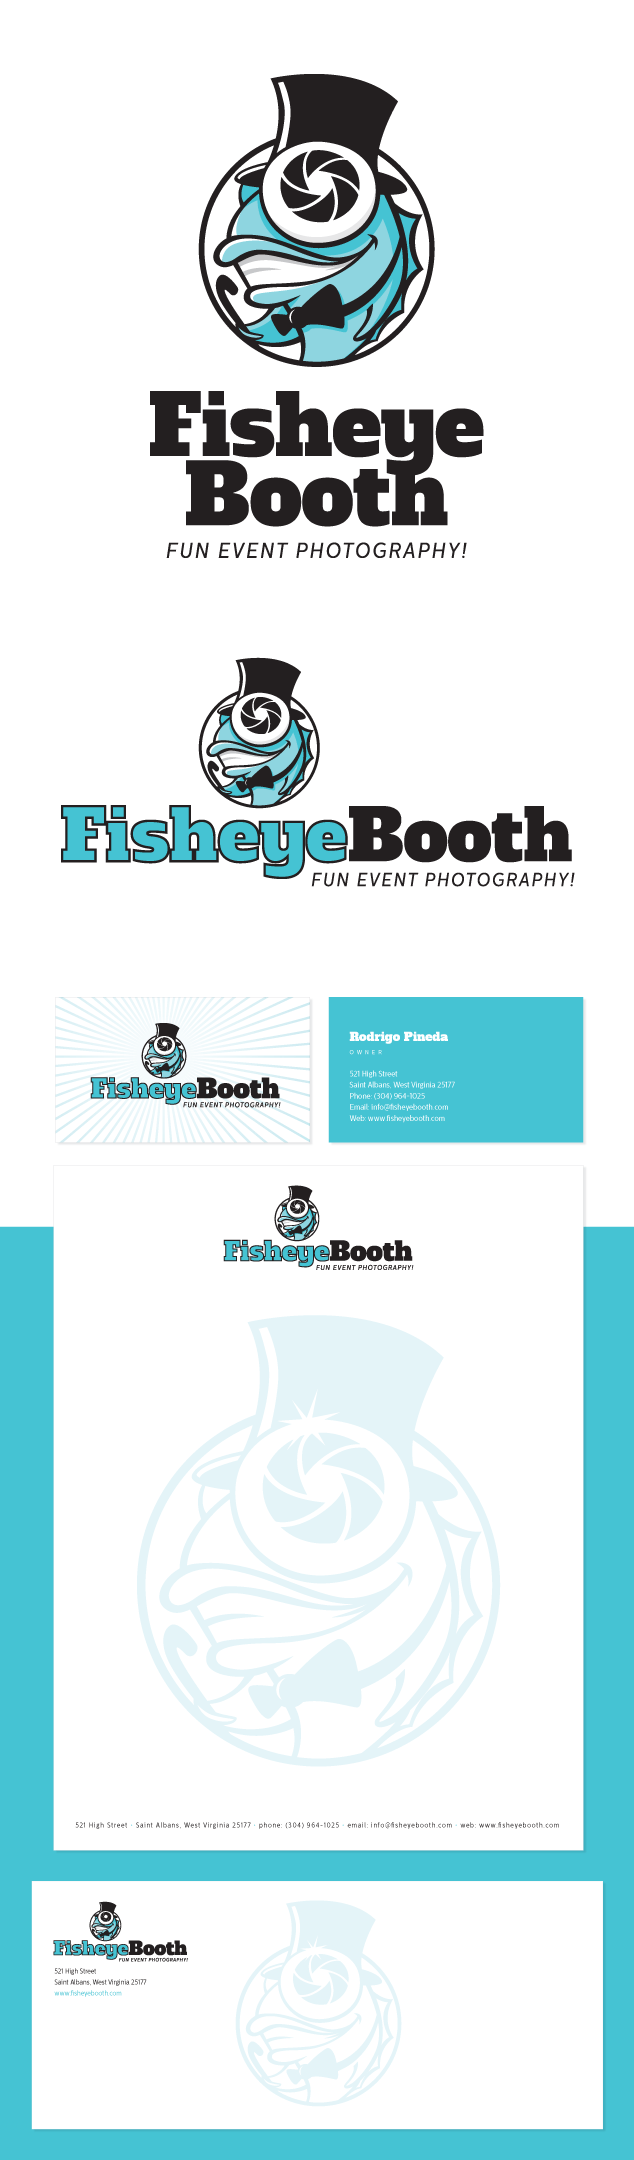 fisheye photography logo design